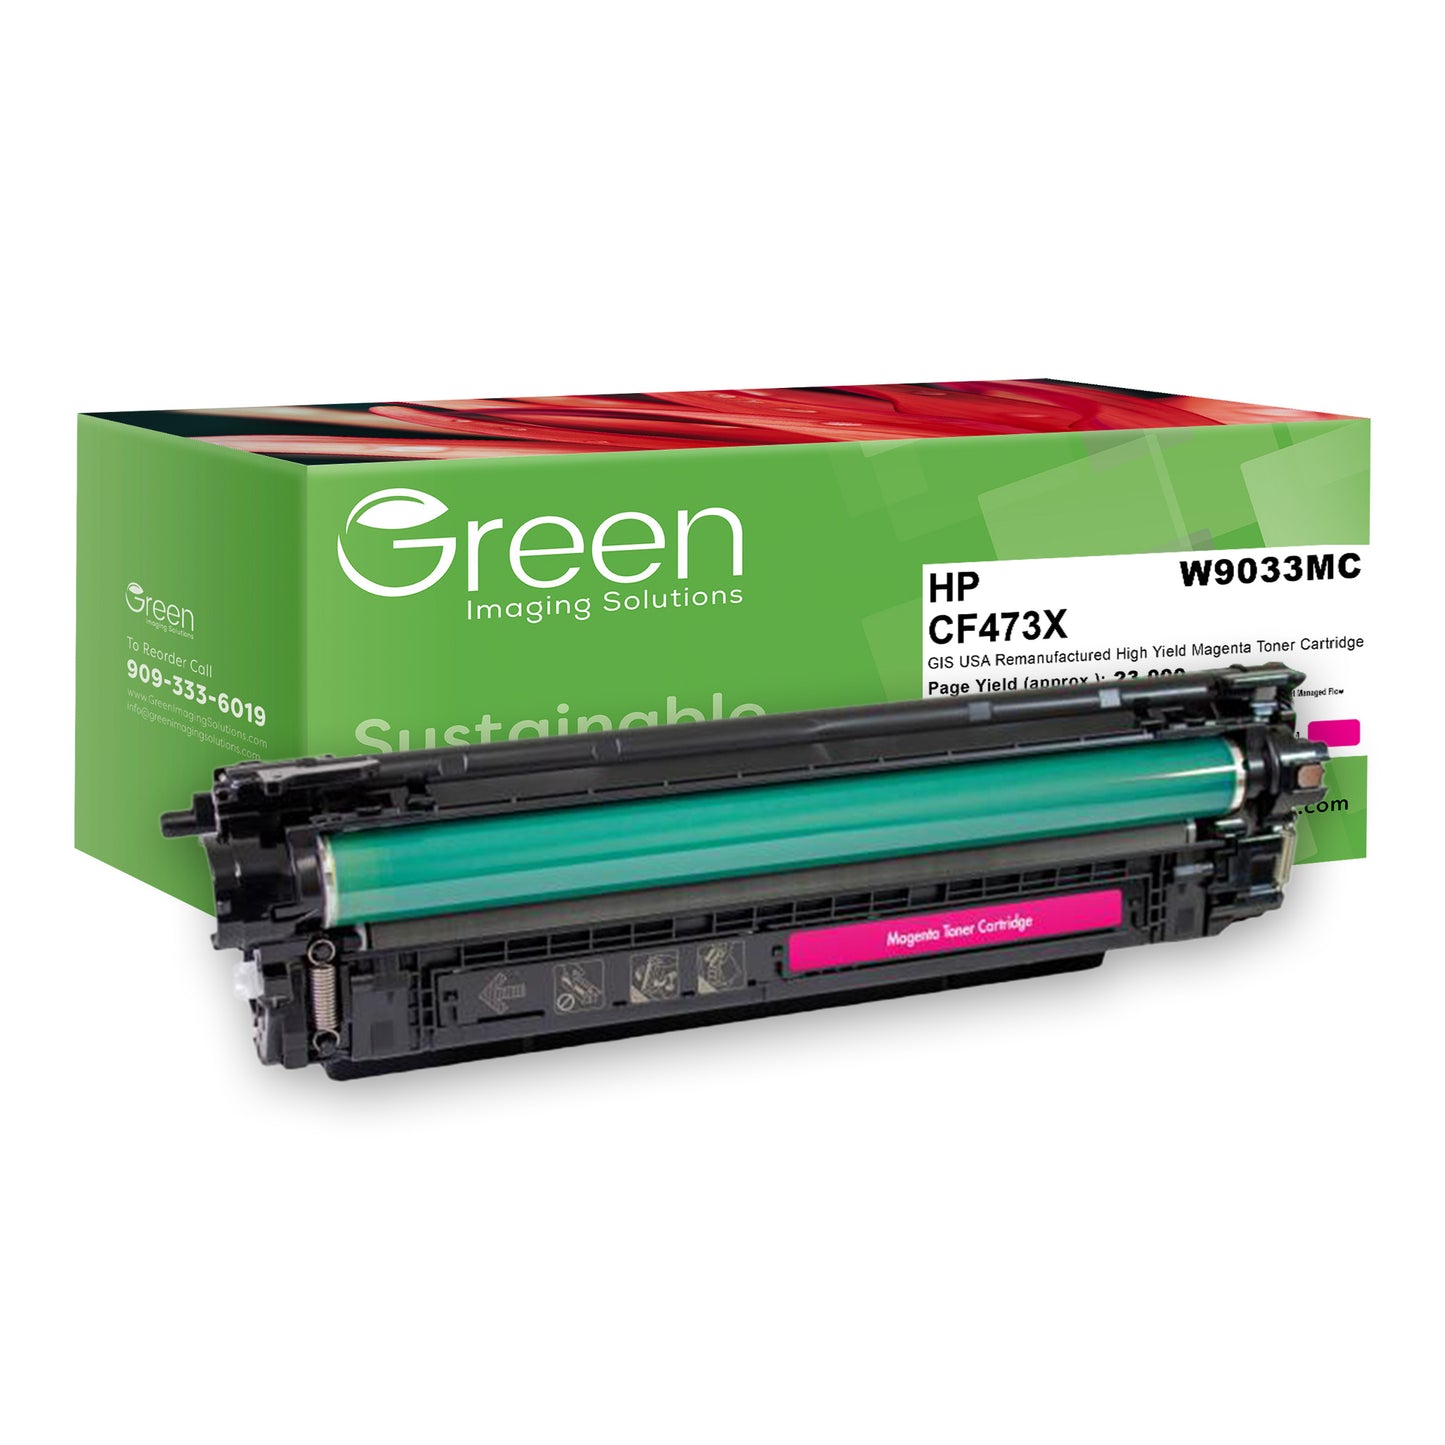 Green Imaging Solutions USA Remanufactured High Yield Magenta Toner Cartridge for HP 657X (CF473X/W9033MC)